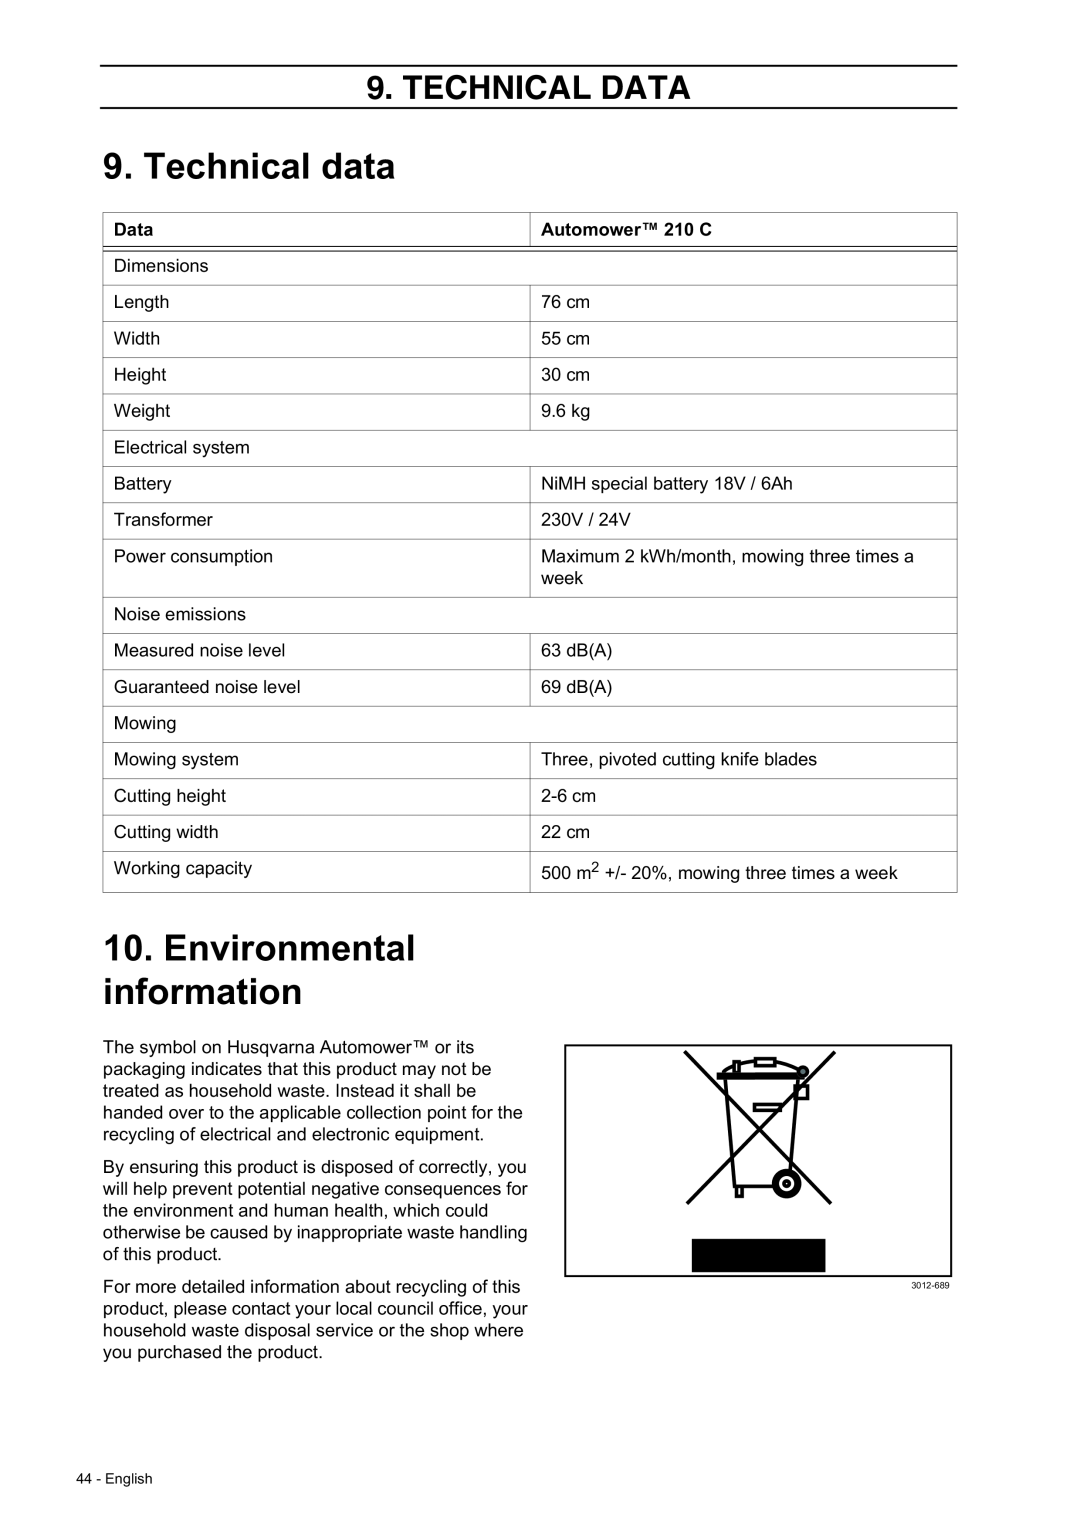 Husqvarna manual Technical data, Environmental, information, Technical Data, Automower 210 C 